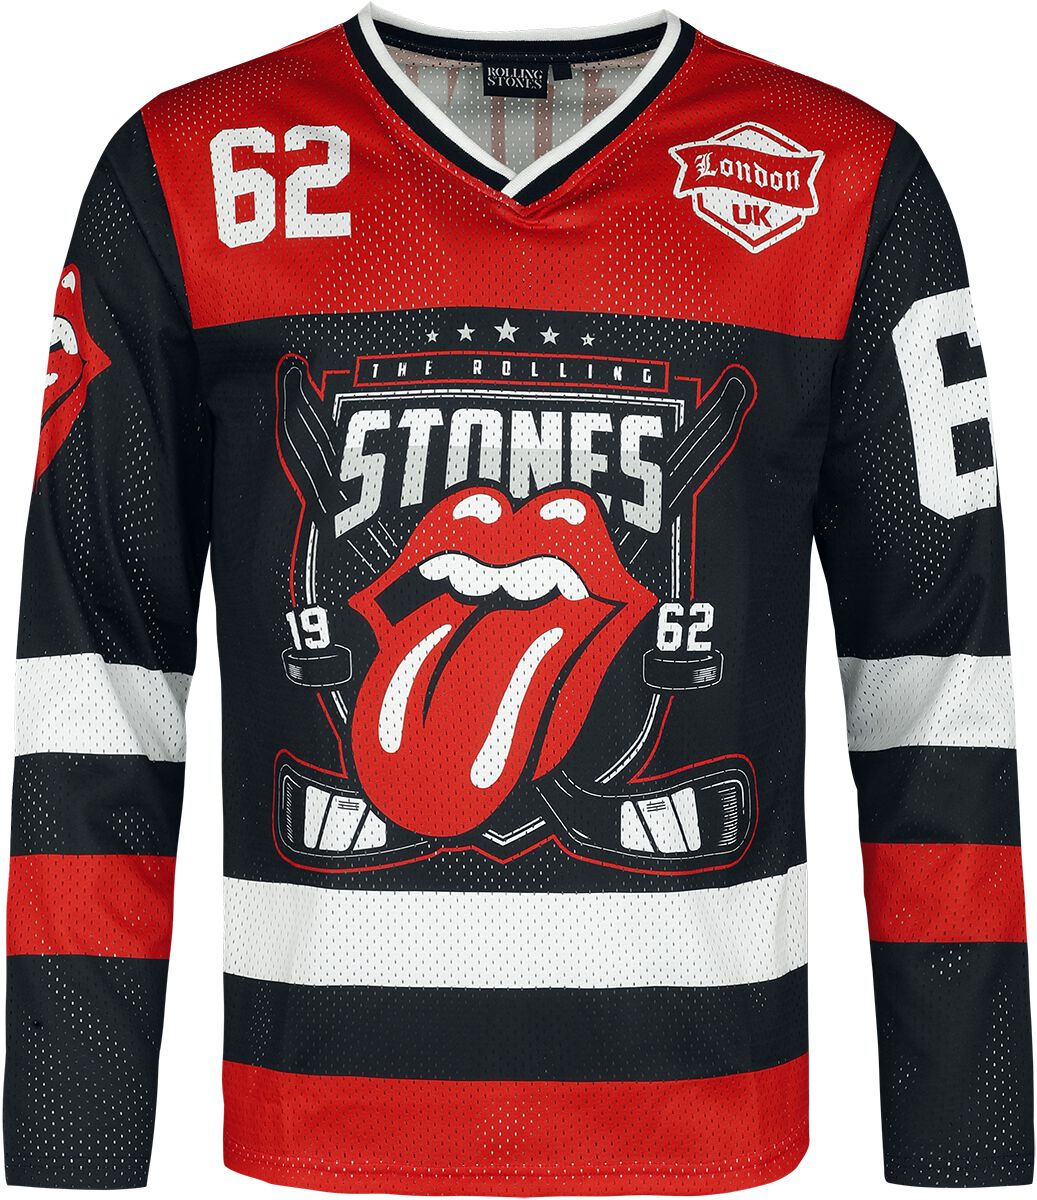 The Rolling Stones Trikot - It`s Only Rock N Roll - L bis 3XL - für Männer - Größe L - multicolor  - EMP exklusives Merchandise!